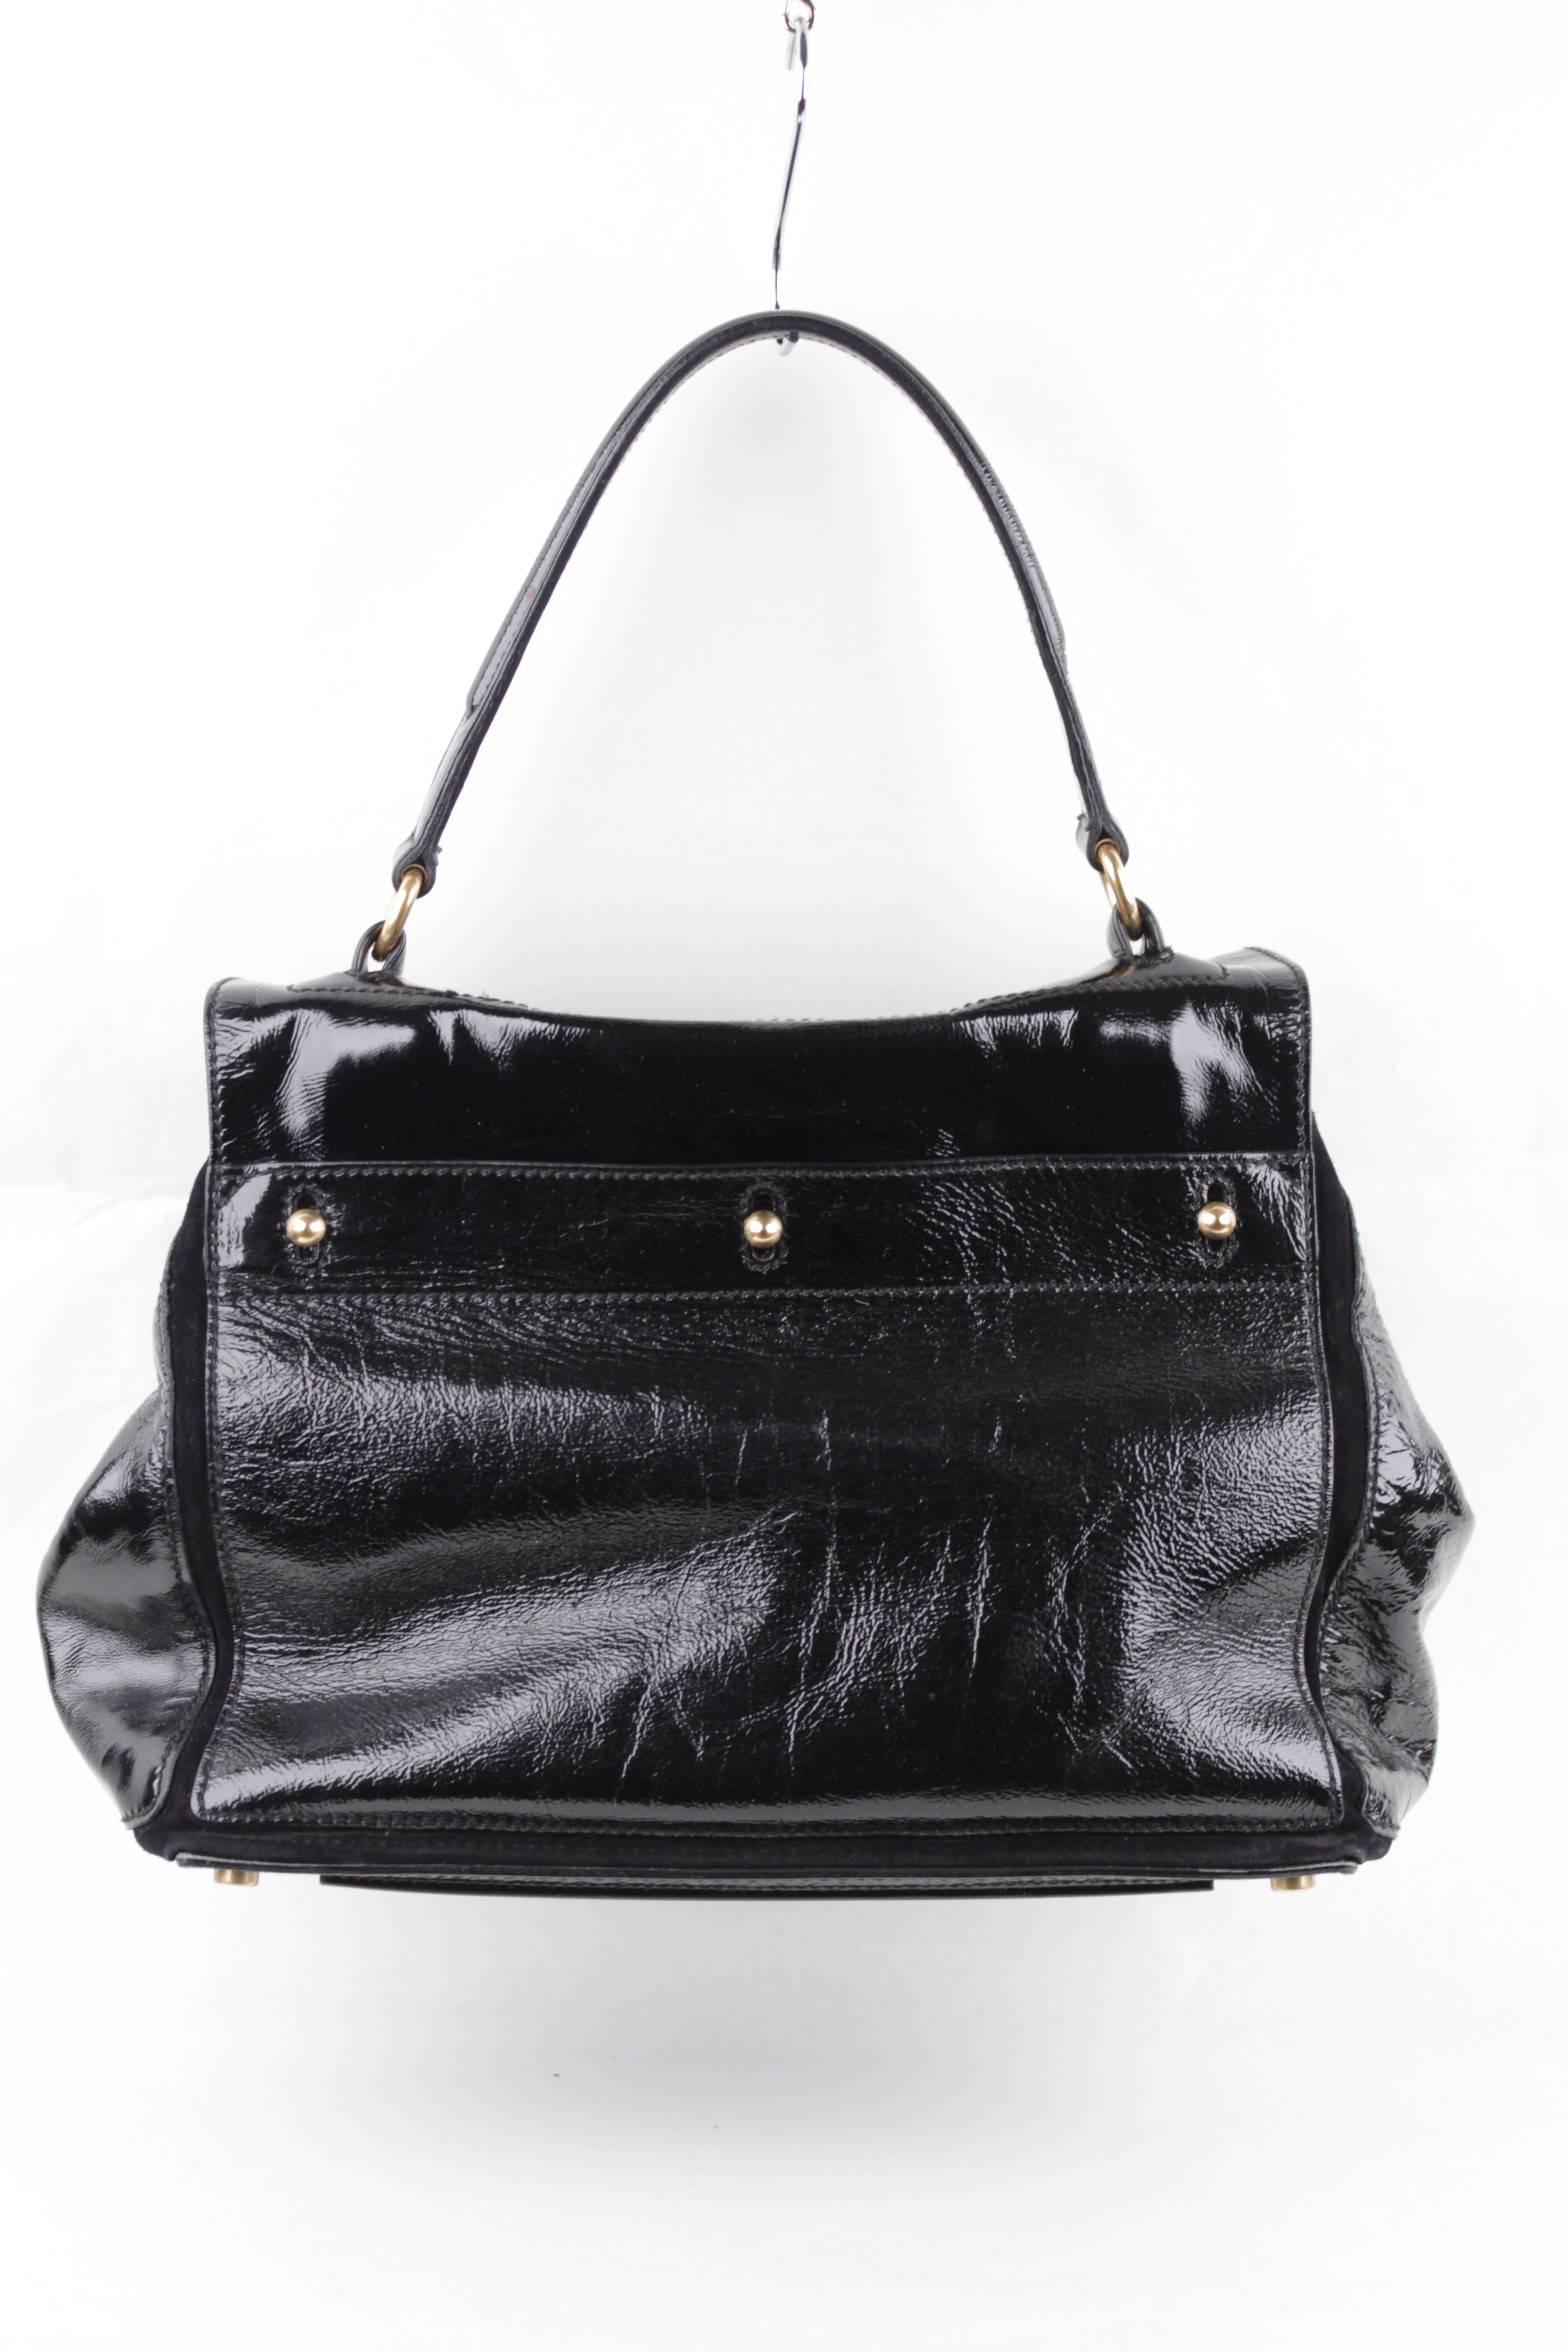 YVES SAINT LAURENT Black Patent Leather MUSE TWO 2 Satchel TOTE Handbag 1